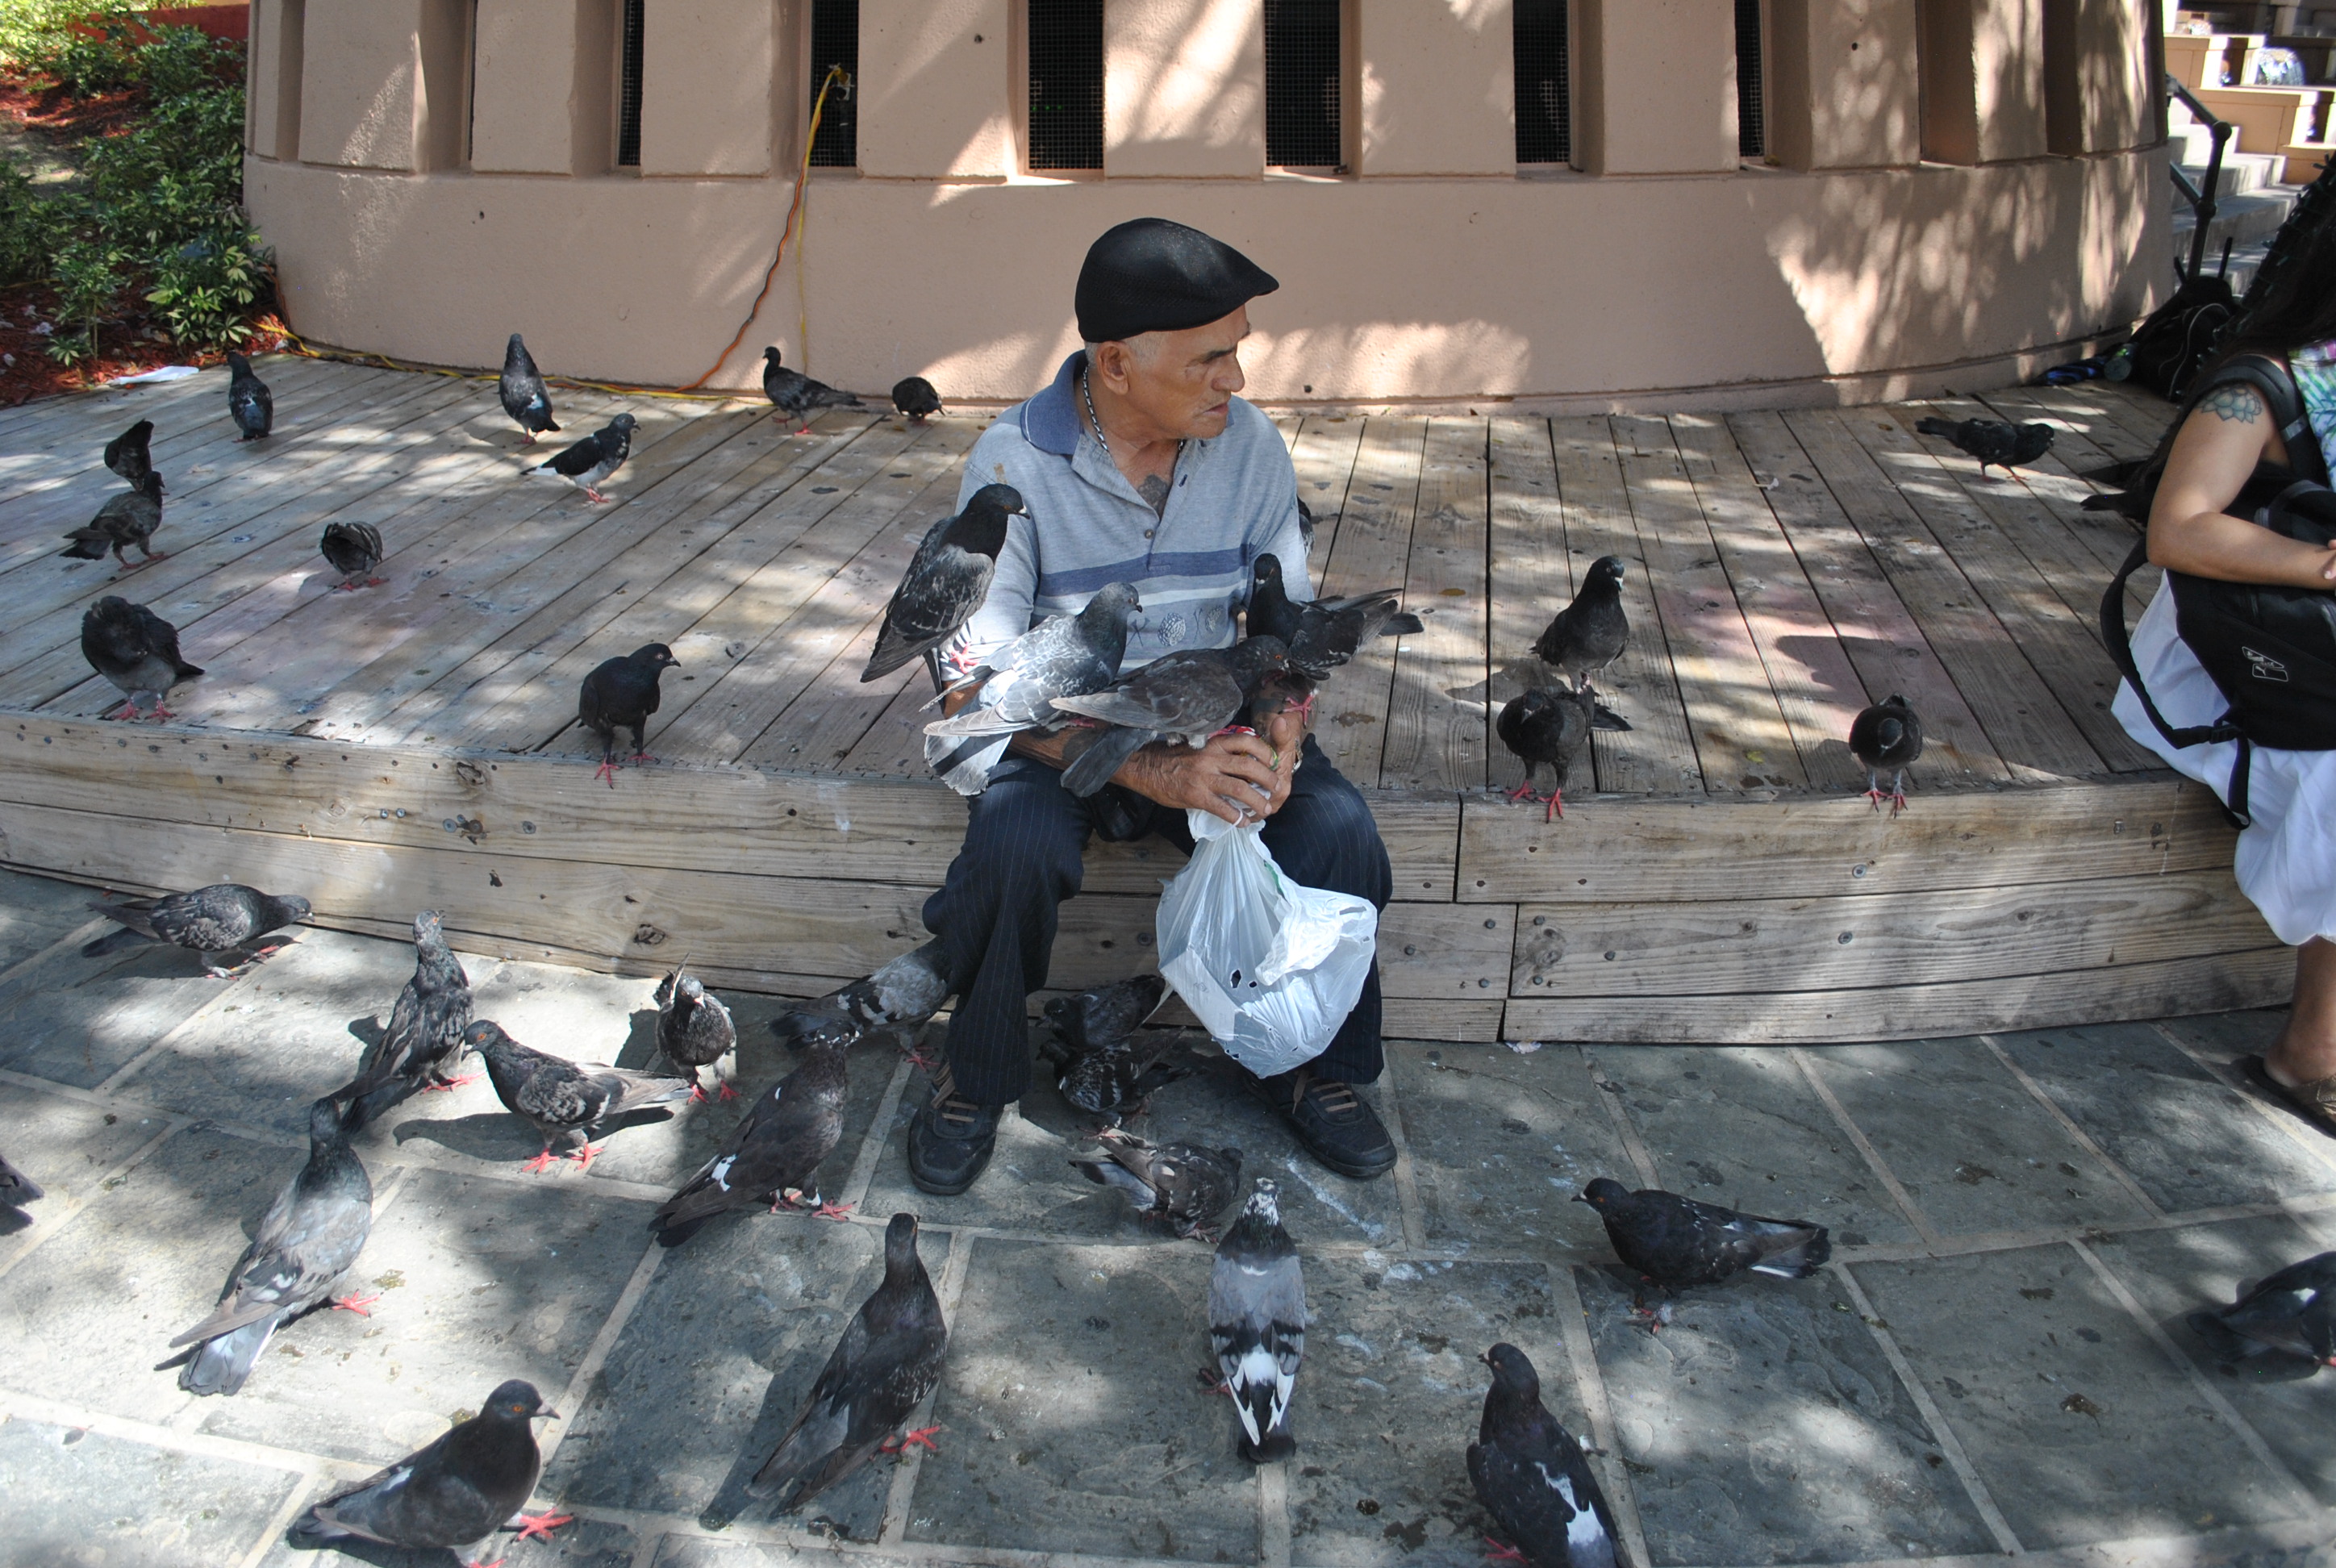 Local feeding the pigeons